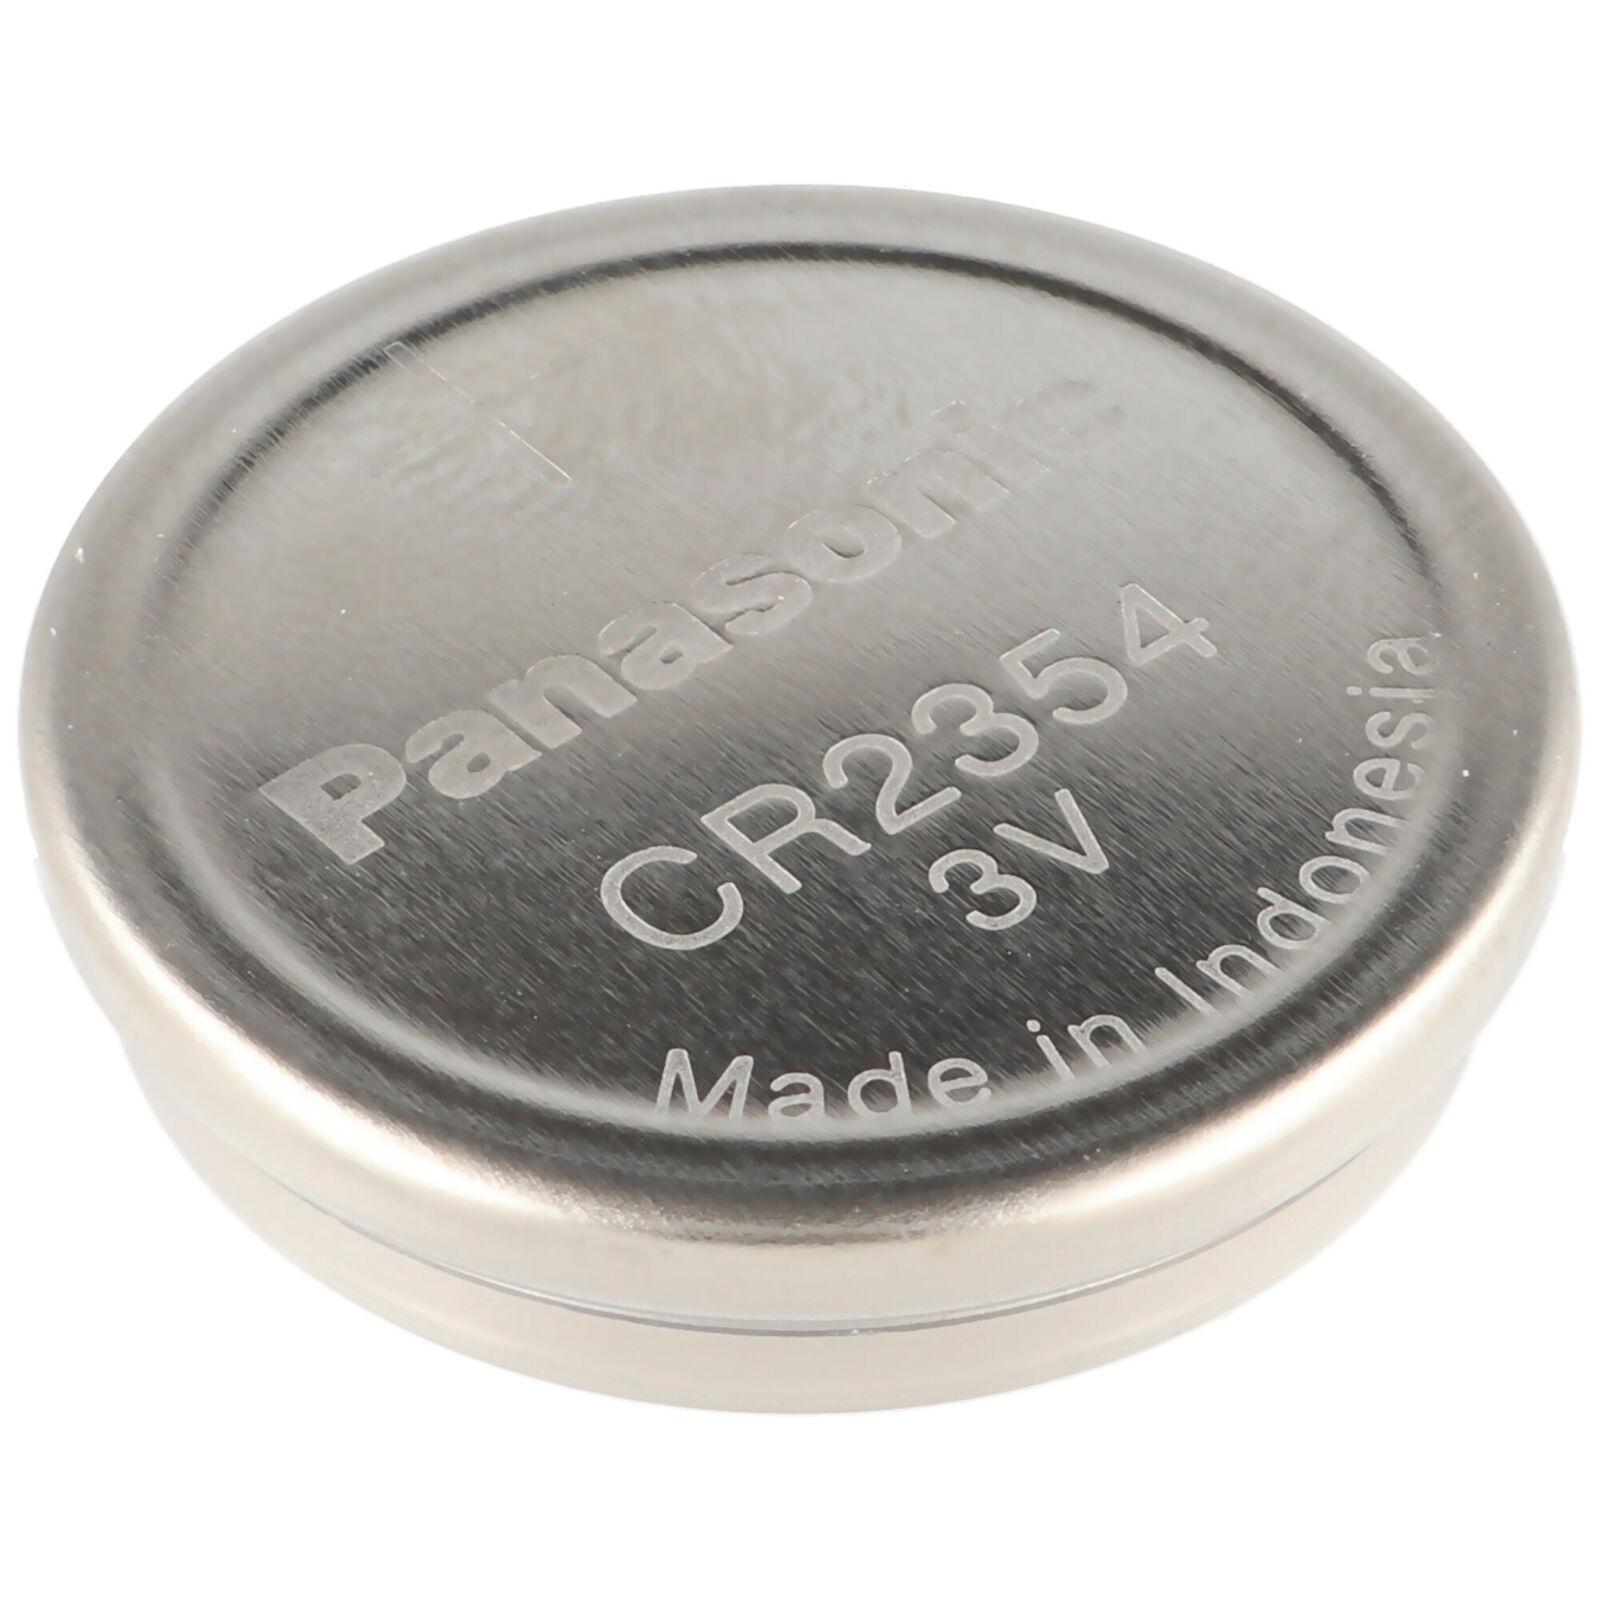 Baterie Panasonic CR2354, Lithium, 3V, 16ks